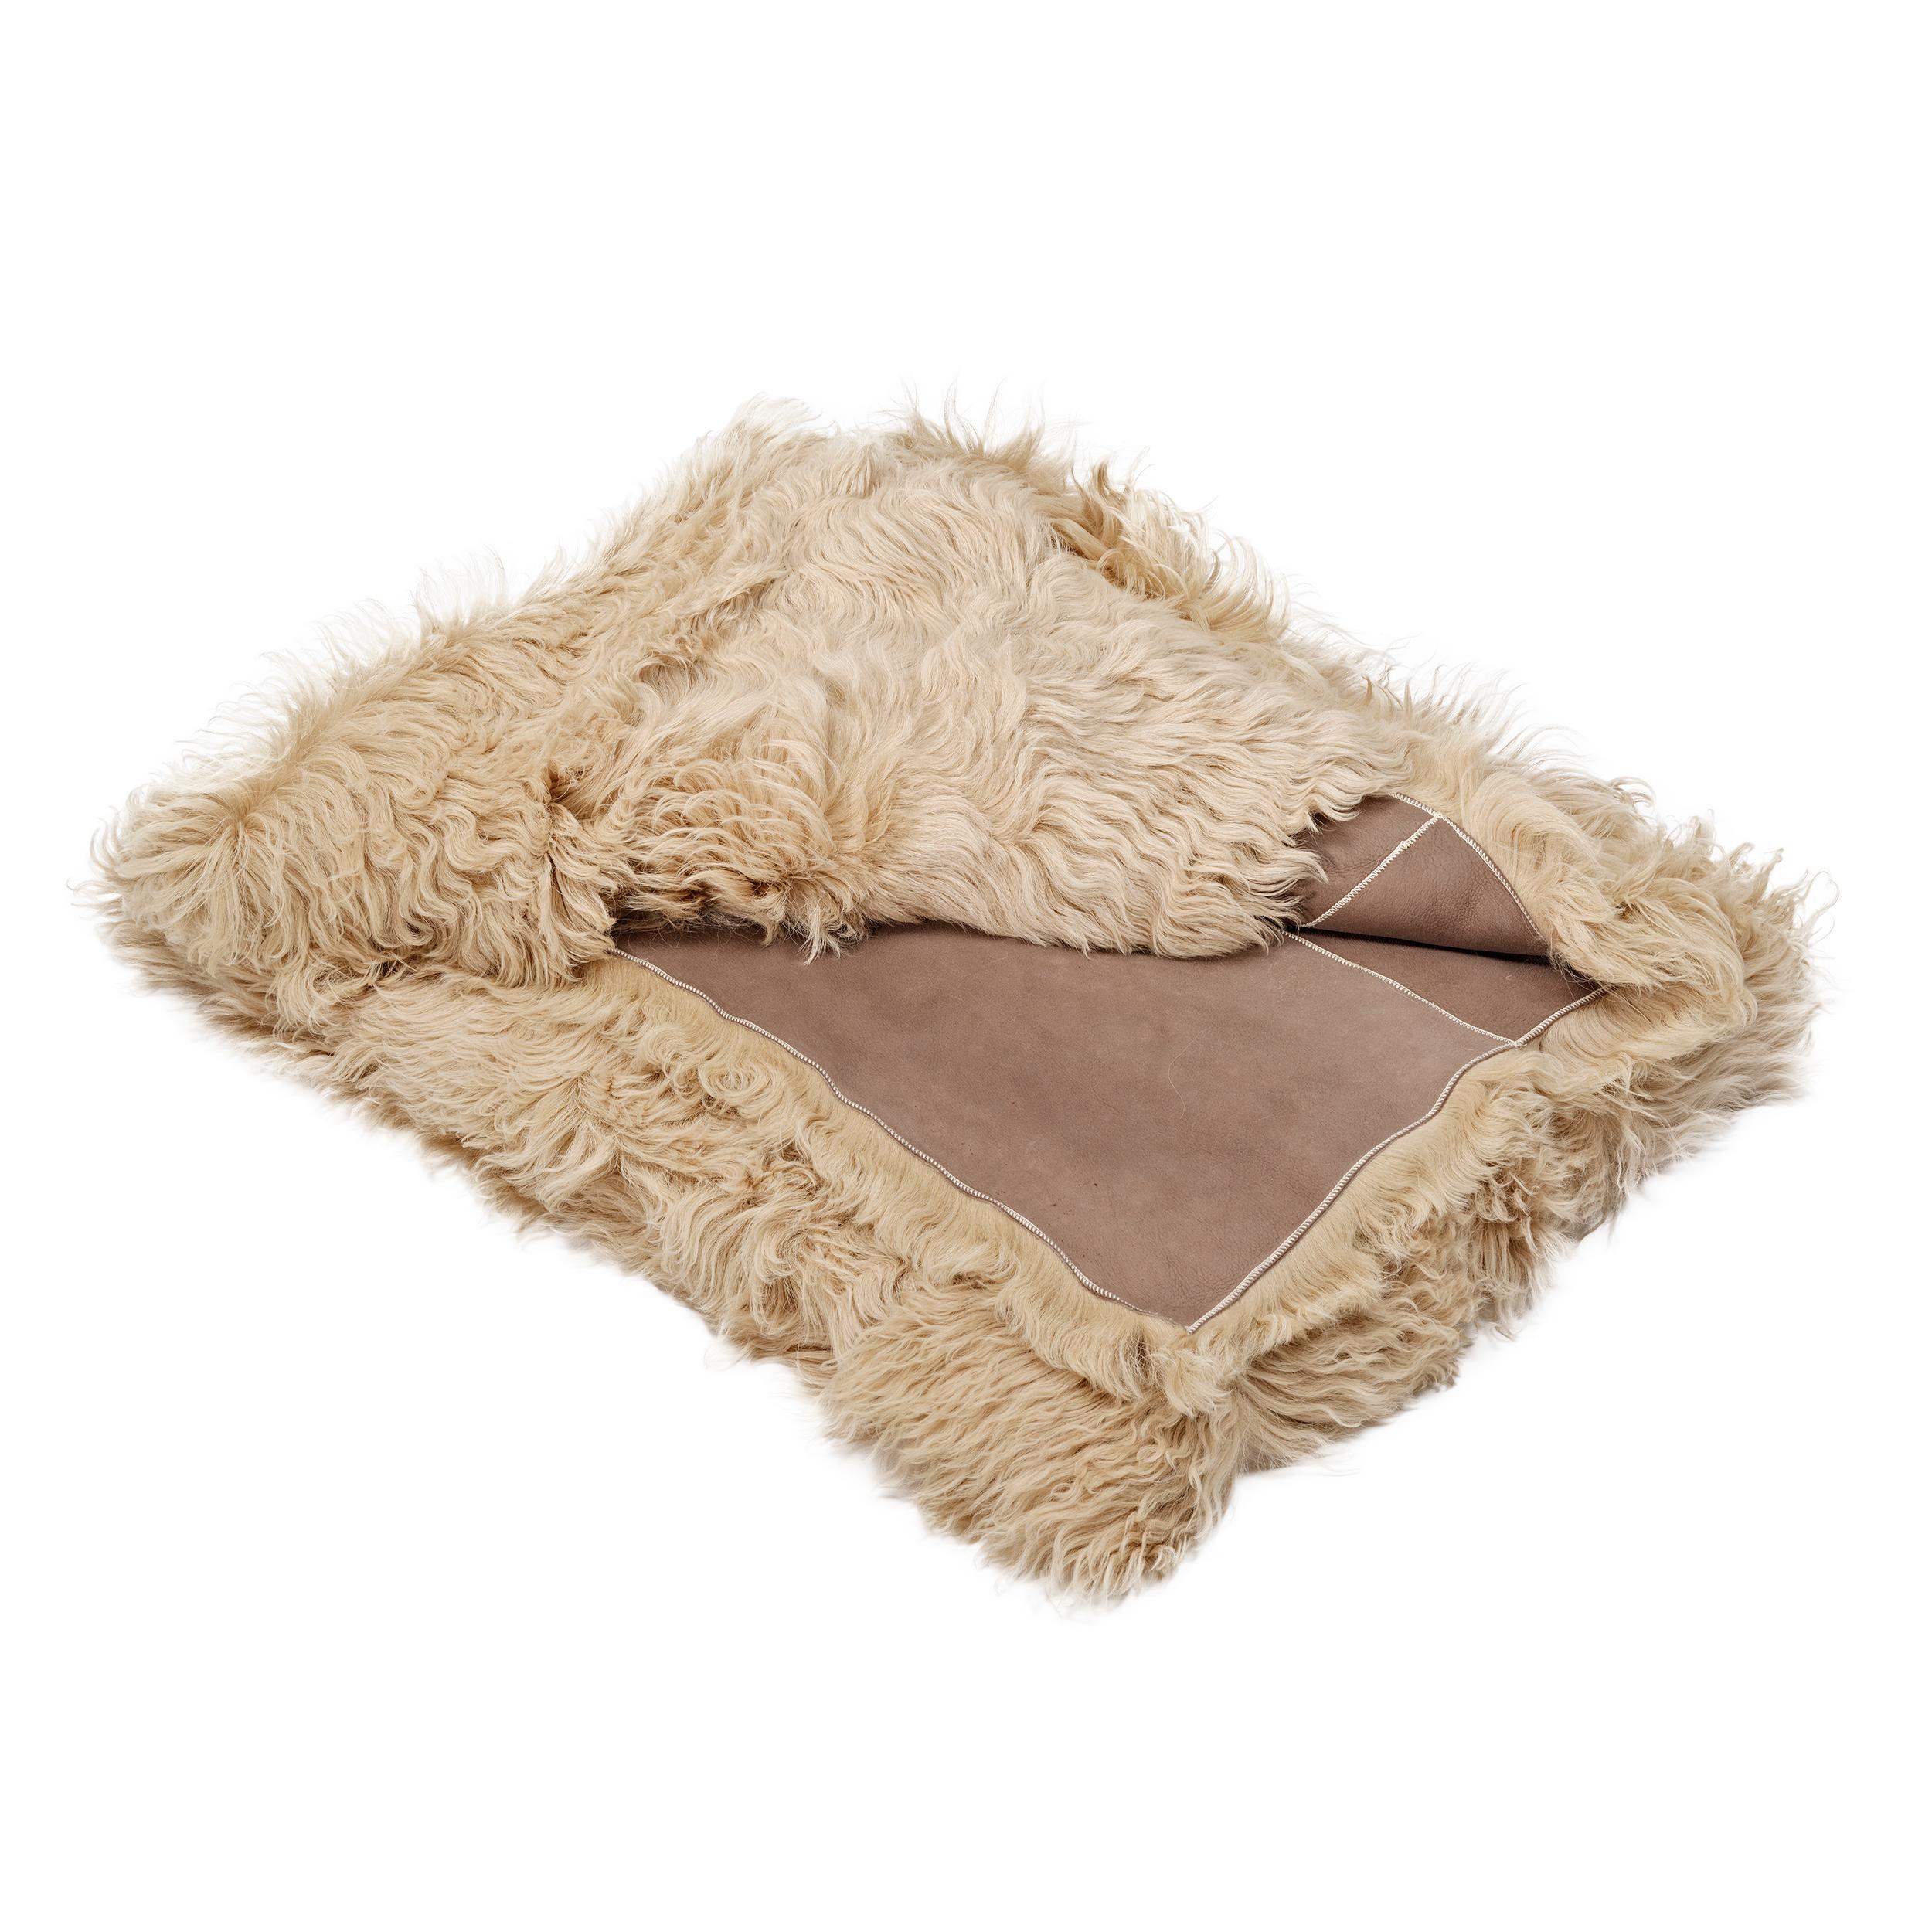 CARAMEL Blanket Throw TOSCANA Wool Shearling Sheepskin real Rug Carpet Natural 